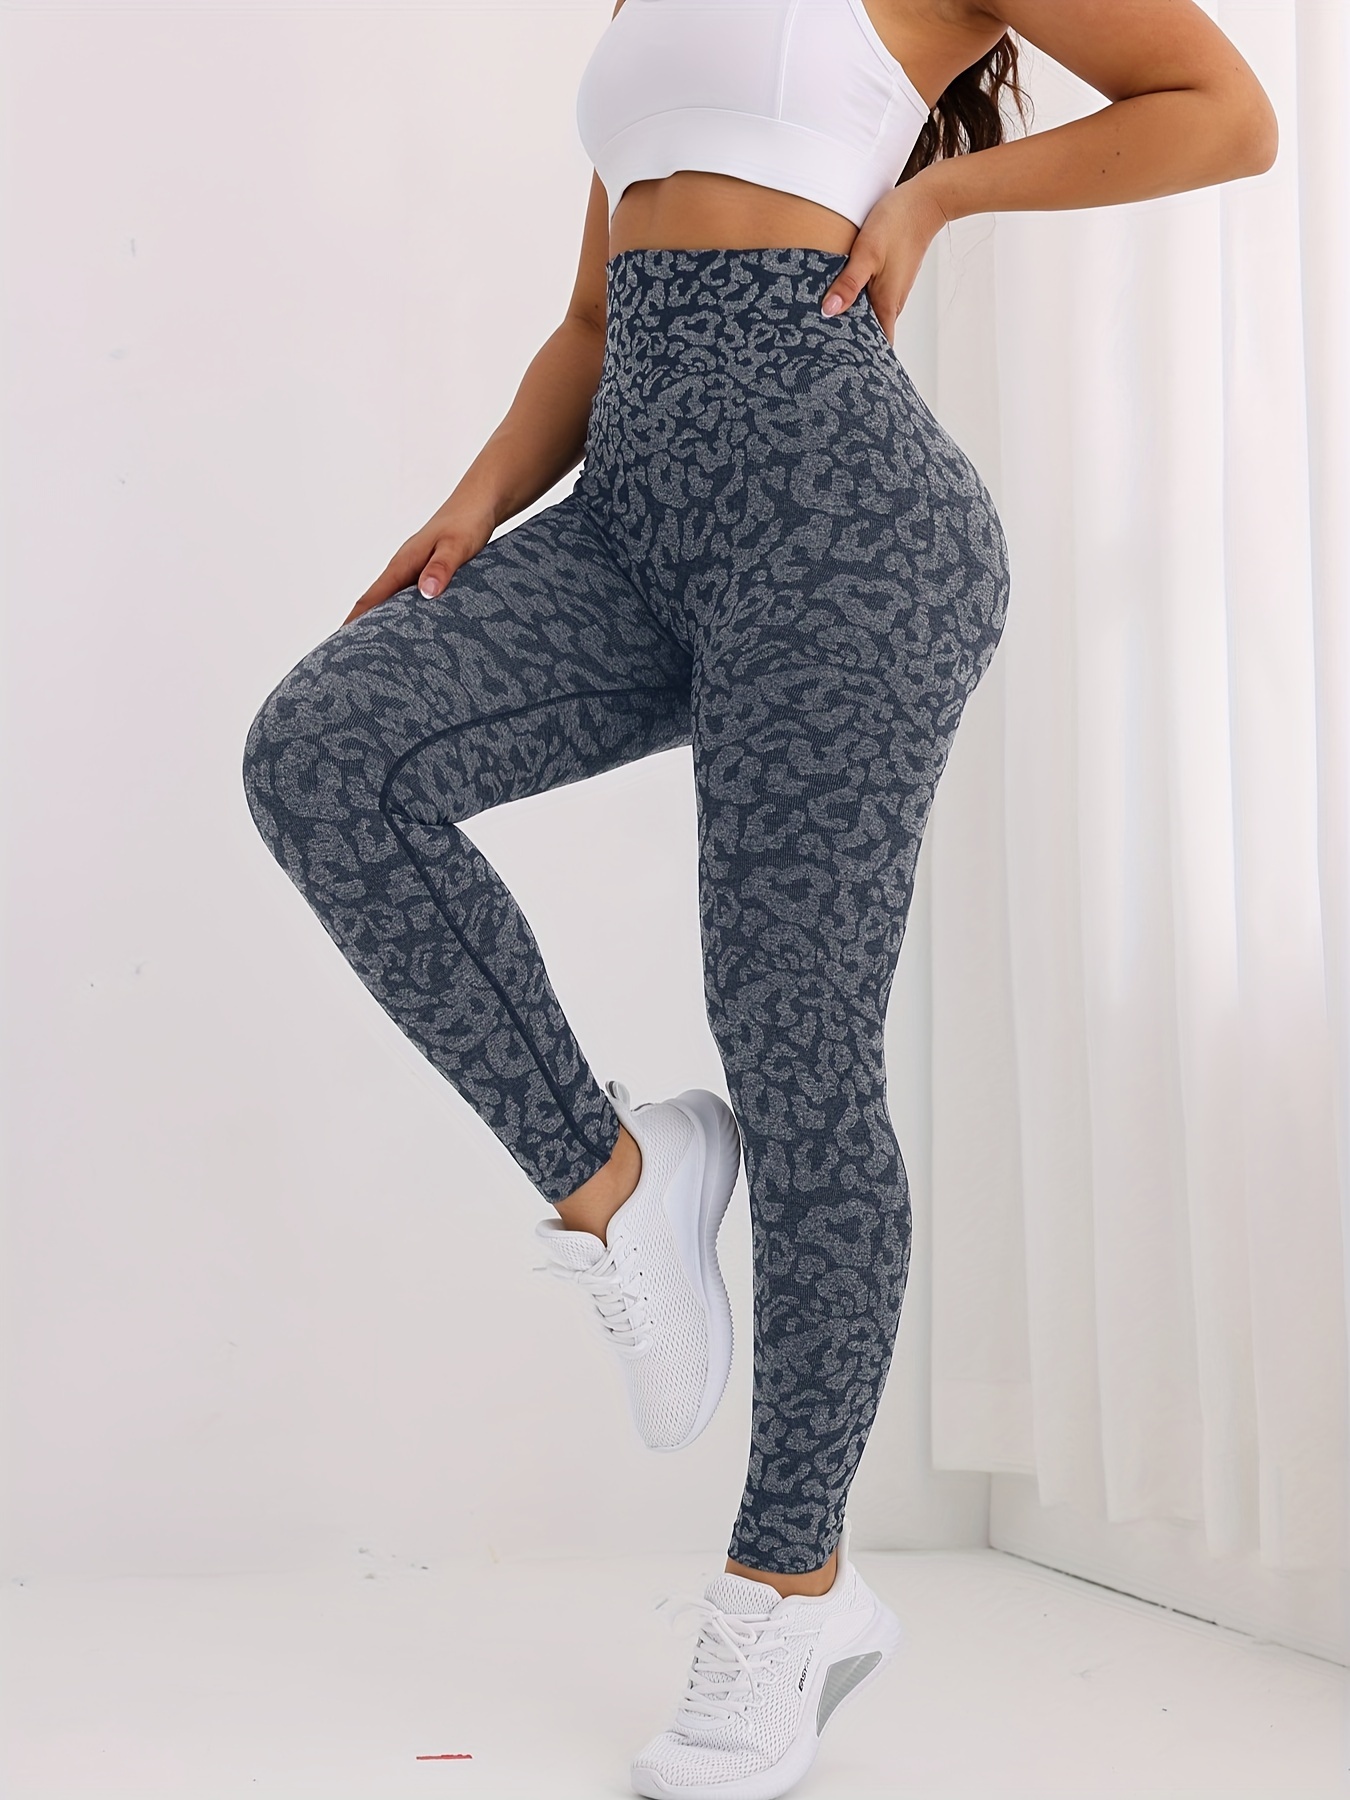  Grey Printed Yoga Leggings for Women Seamless Tummy